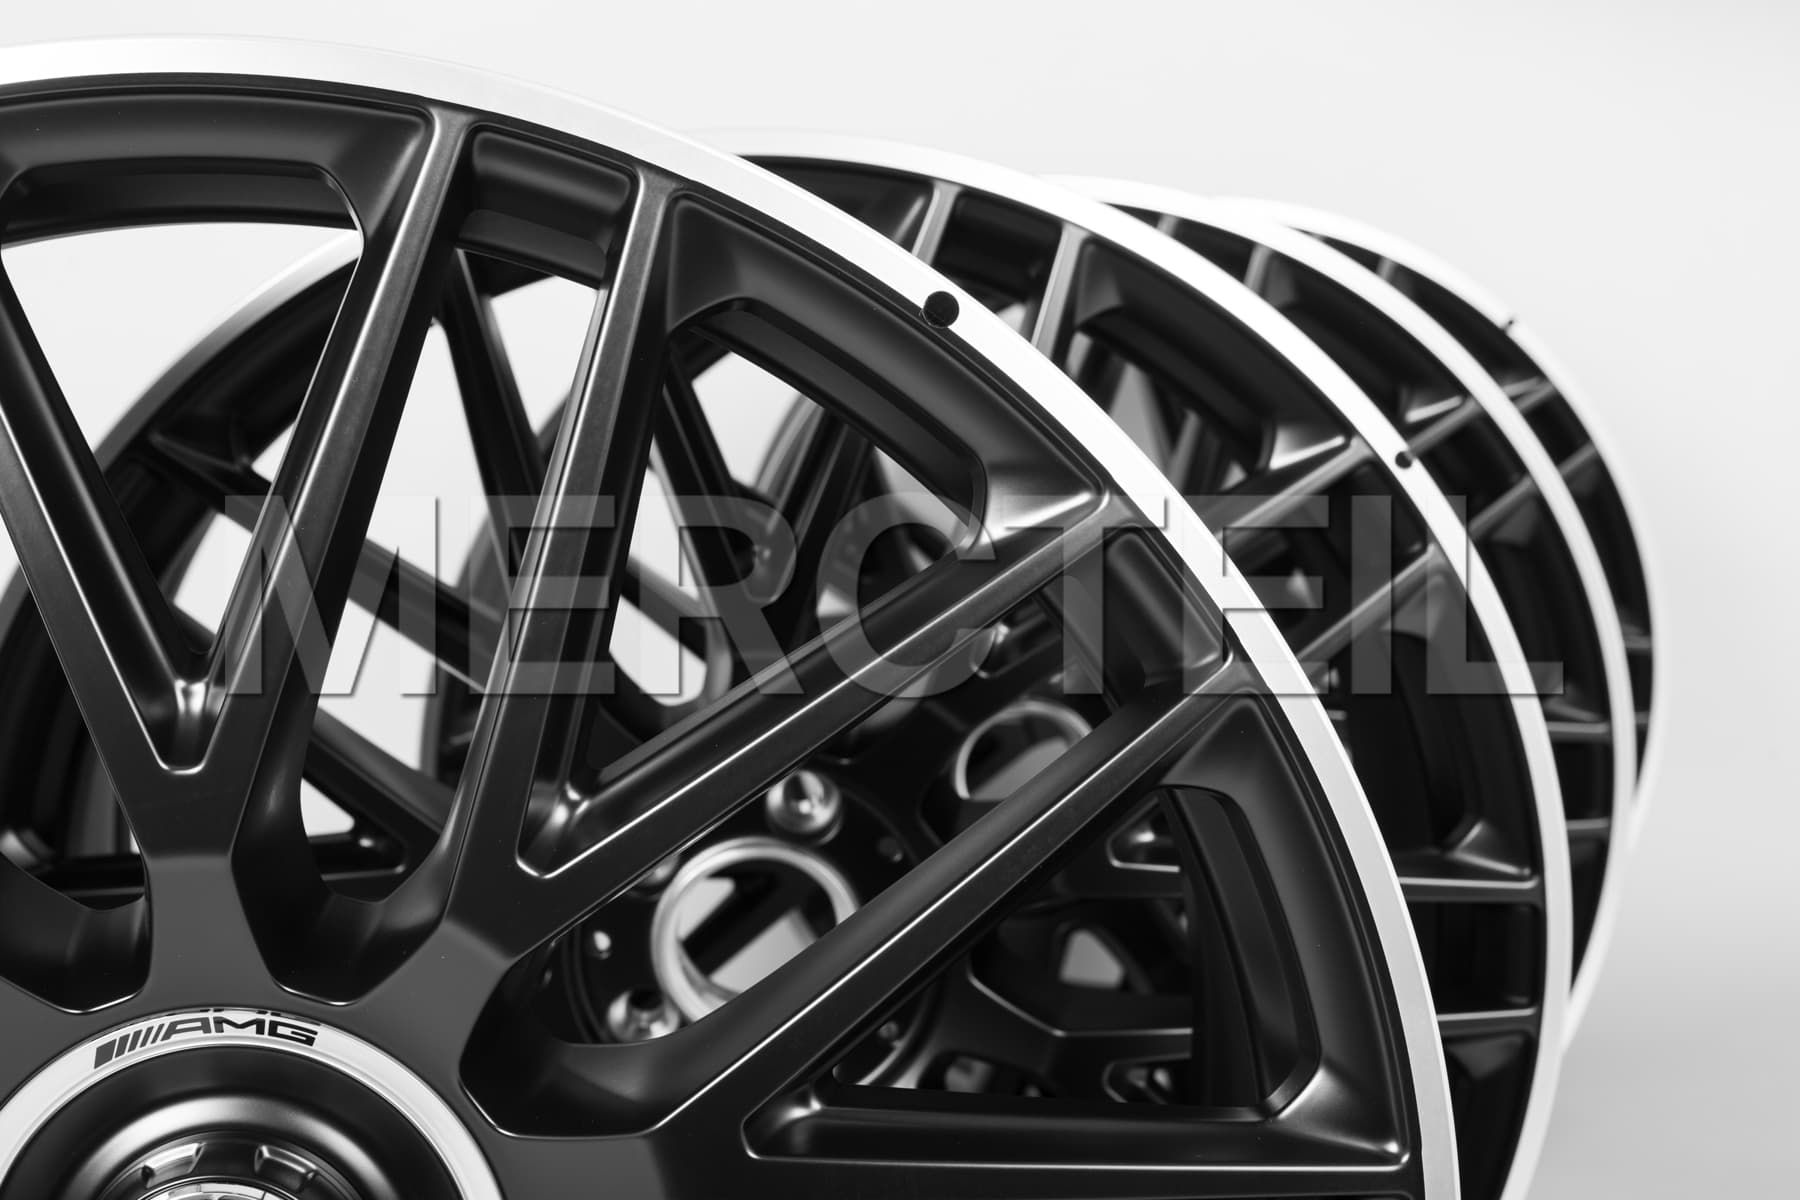 Mercedes GLS 23-inch wheels Genuine Mercedes AMG (part number: 	
A16740186007X71)